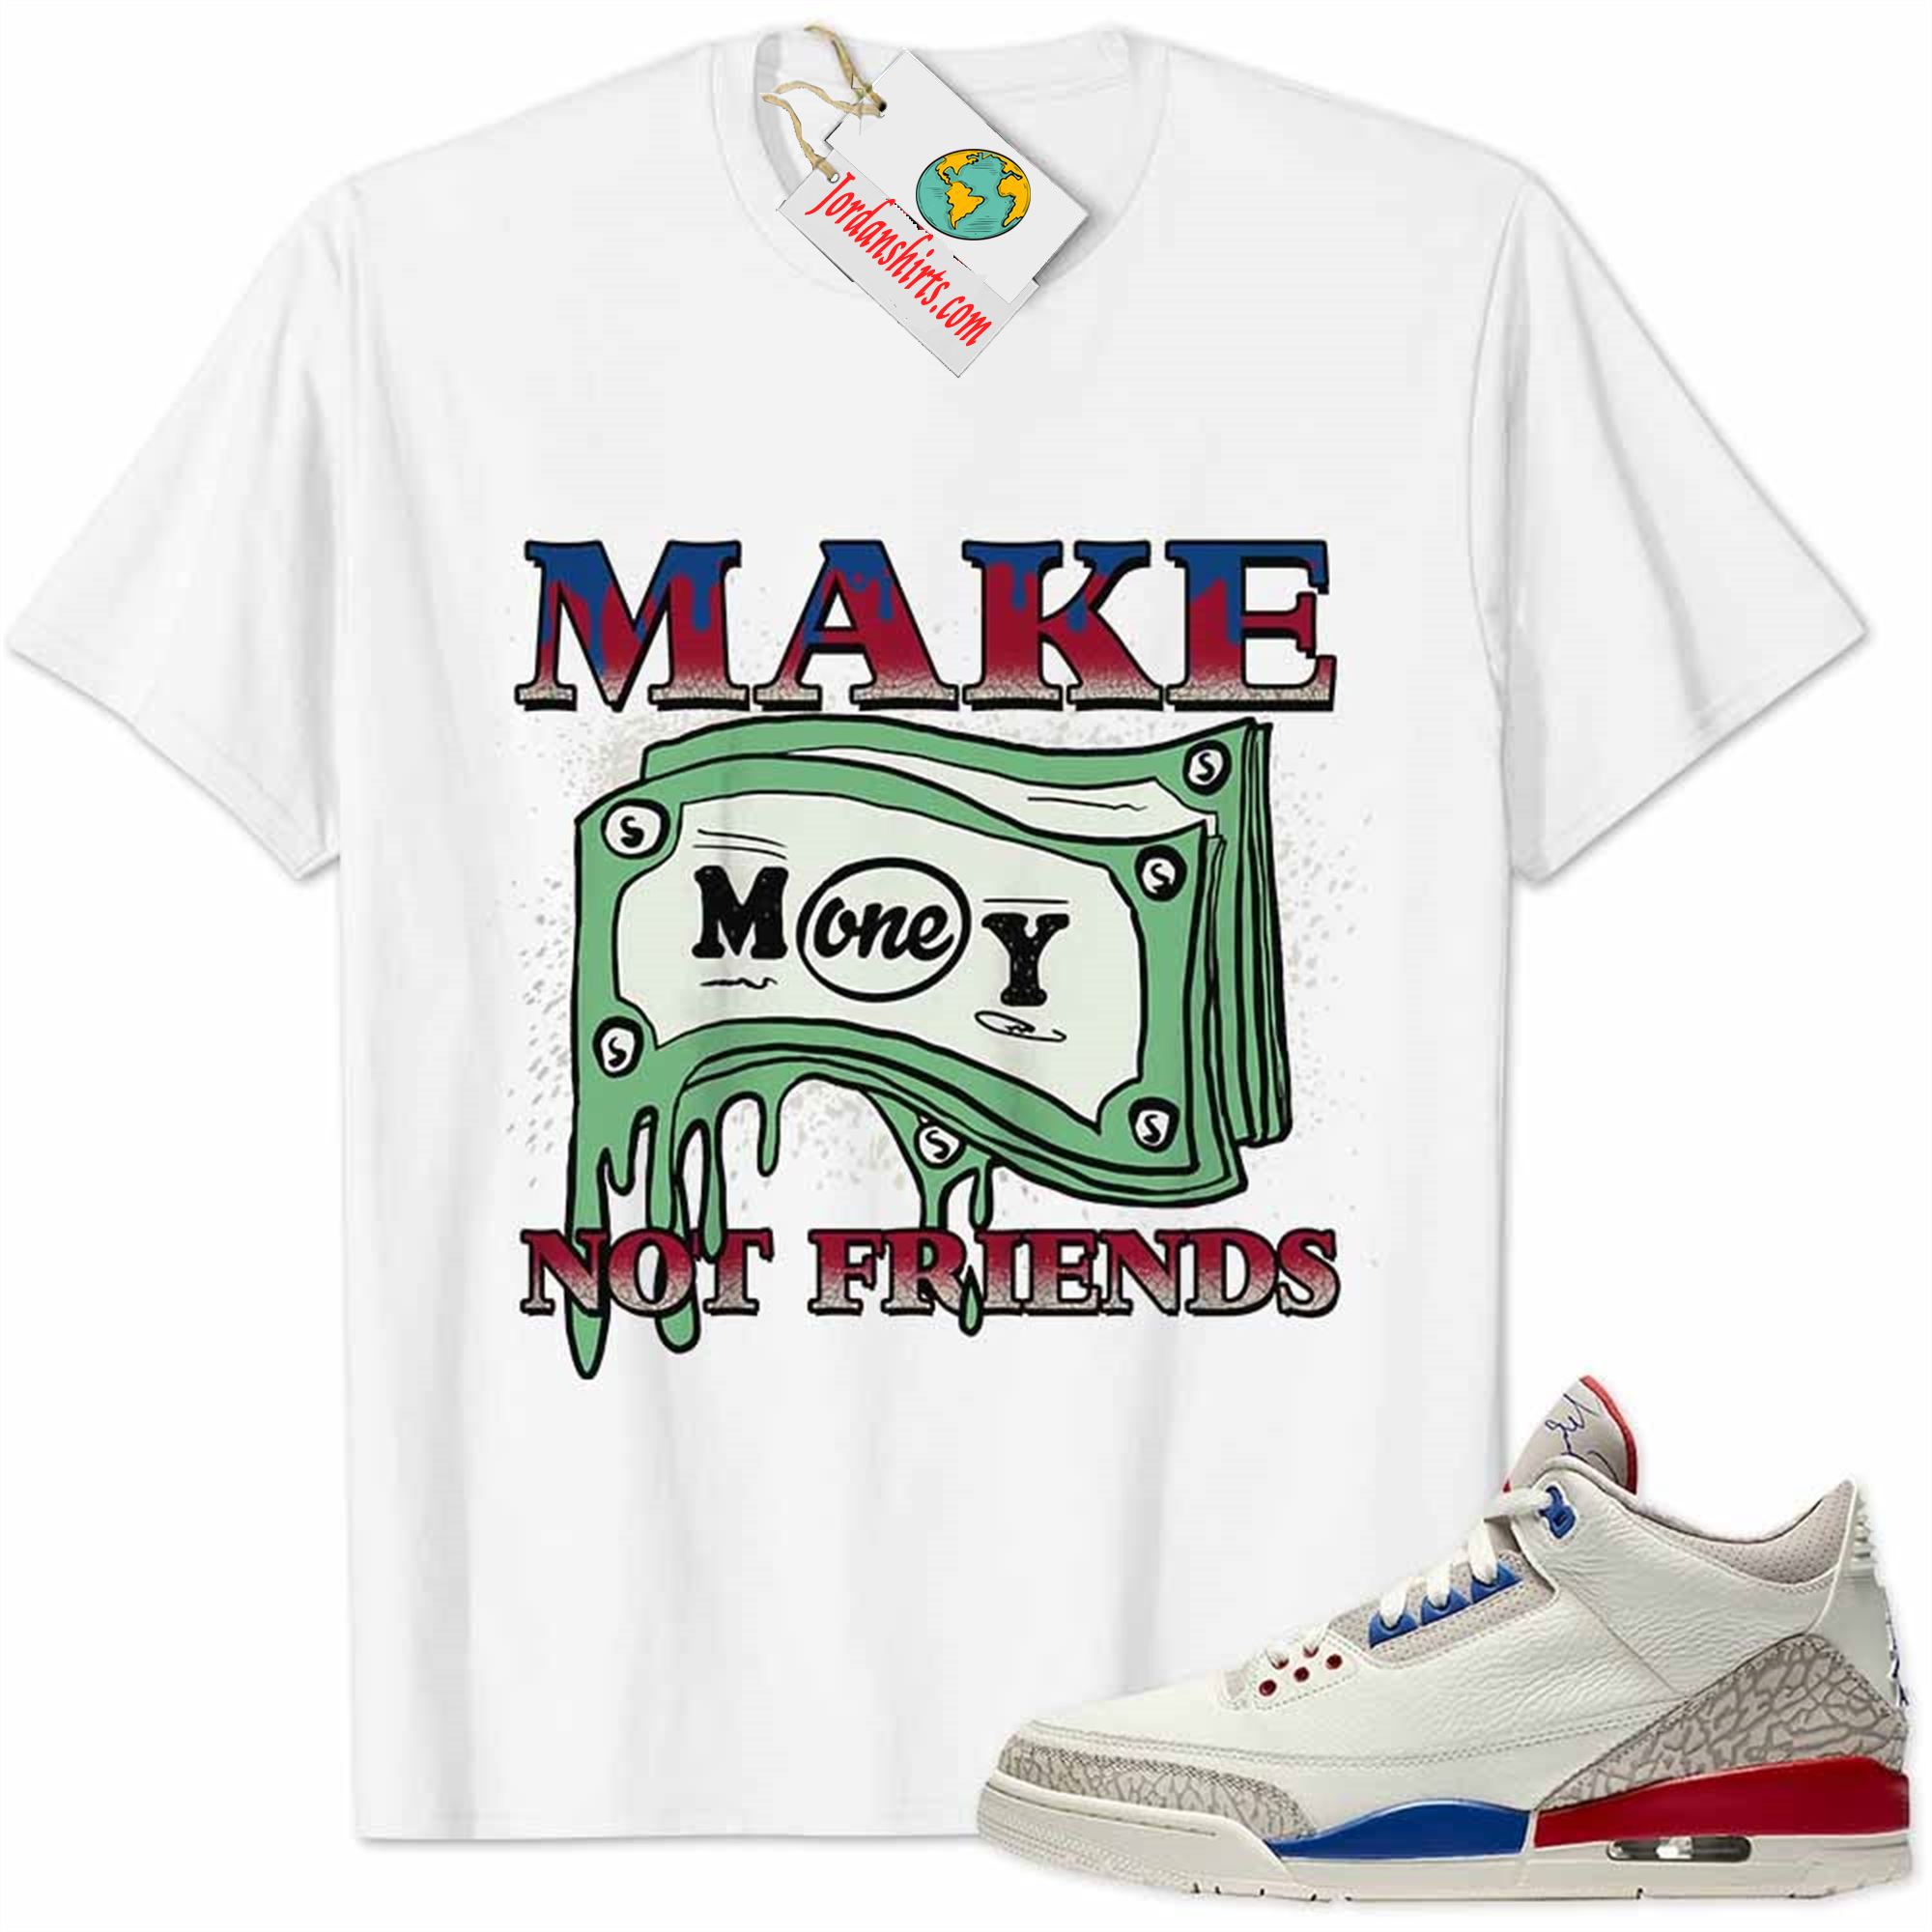 Jordan 3 Shirt, Jordan 3 International Flight Charity Game Shirt Make Money Graffiti White Plus Size Up To 5xl